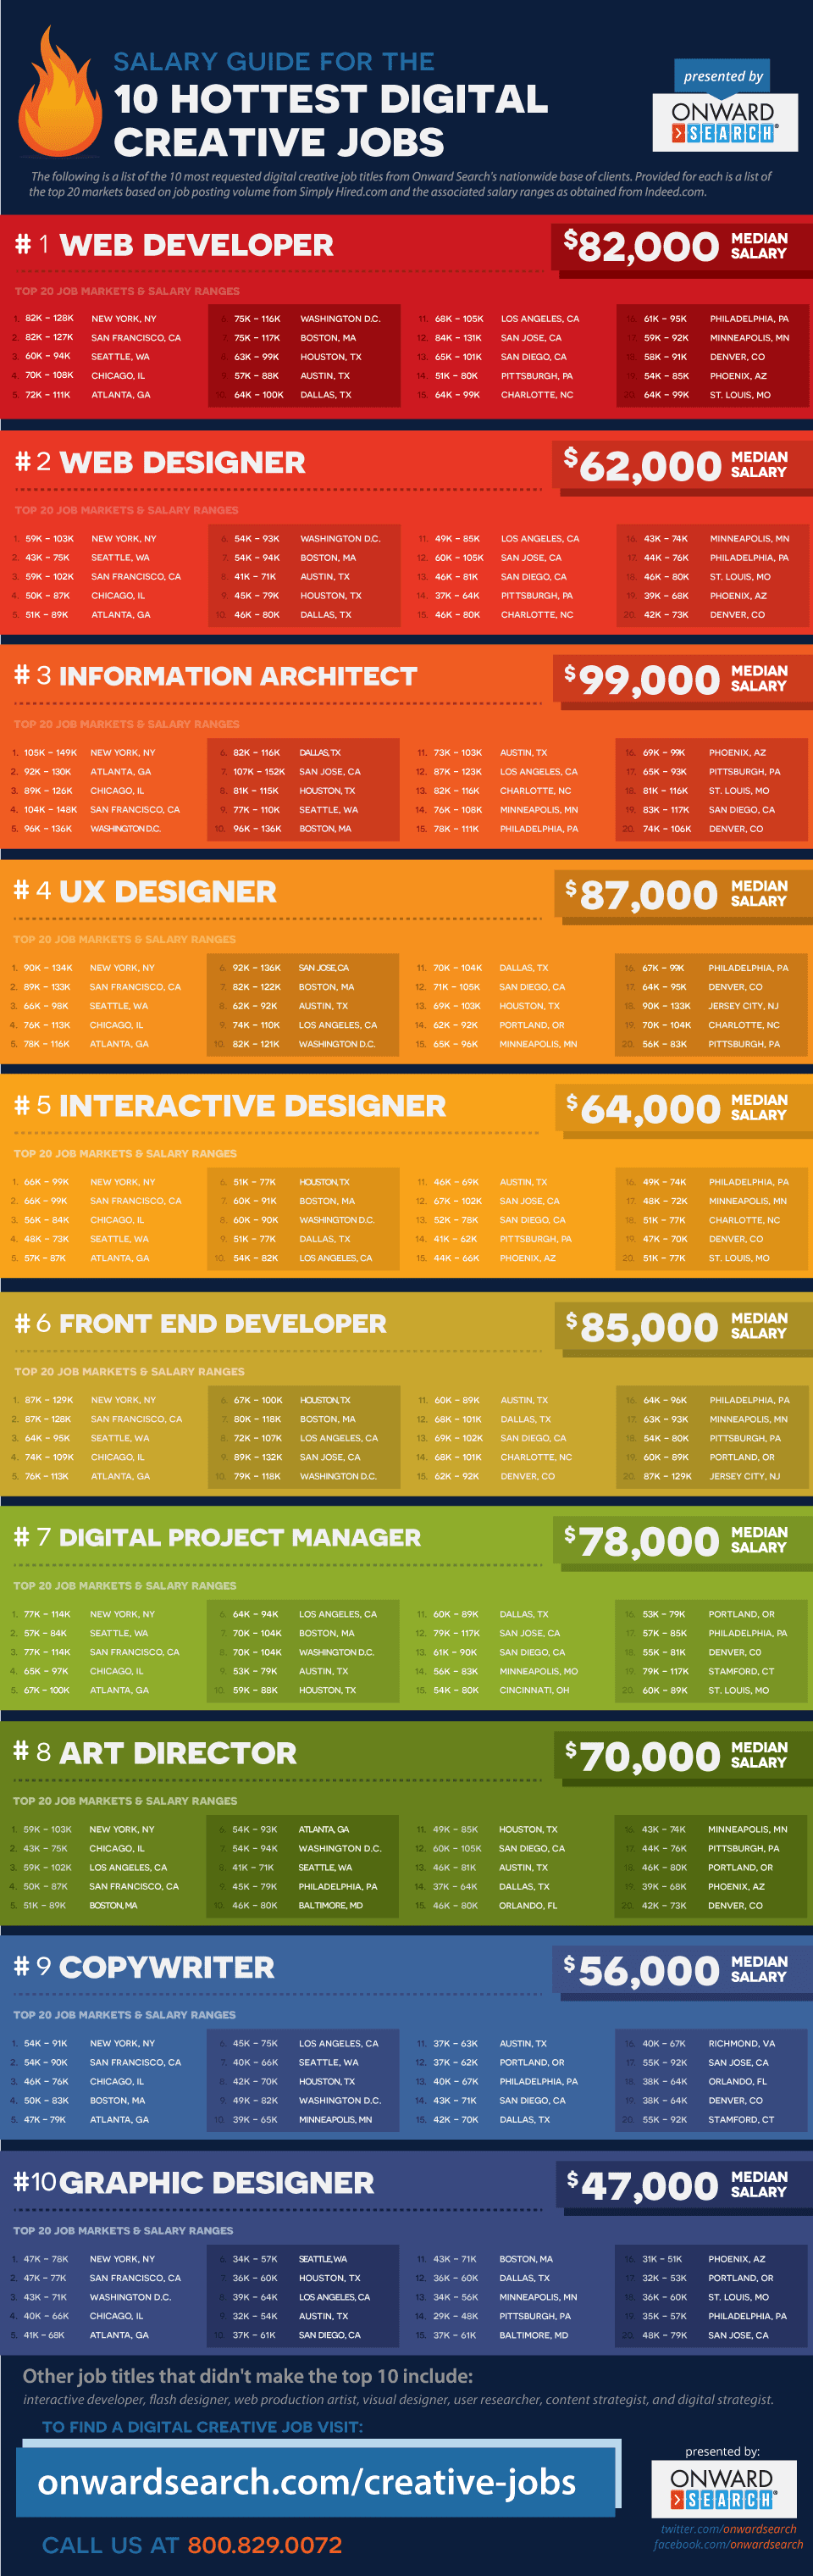 Digital design jobs and salaries